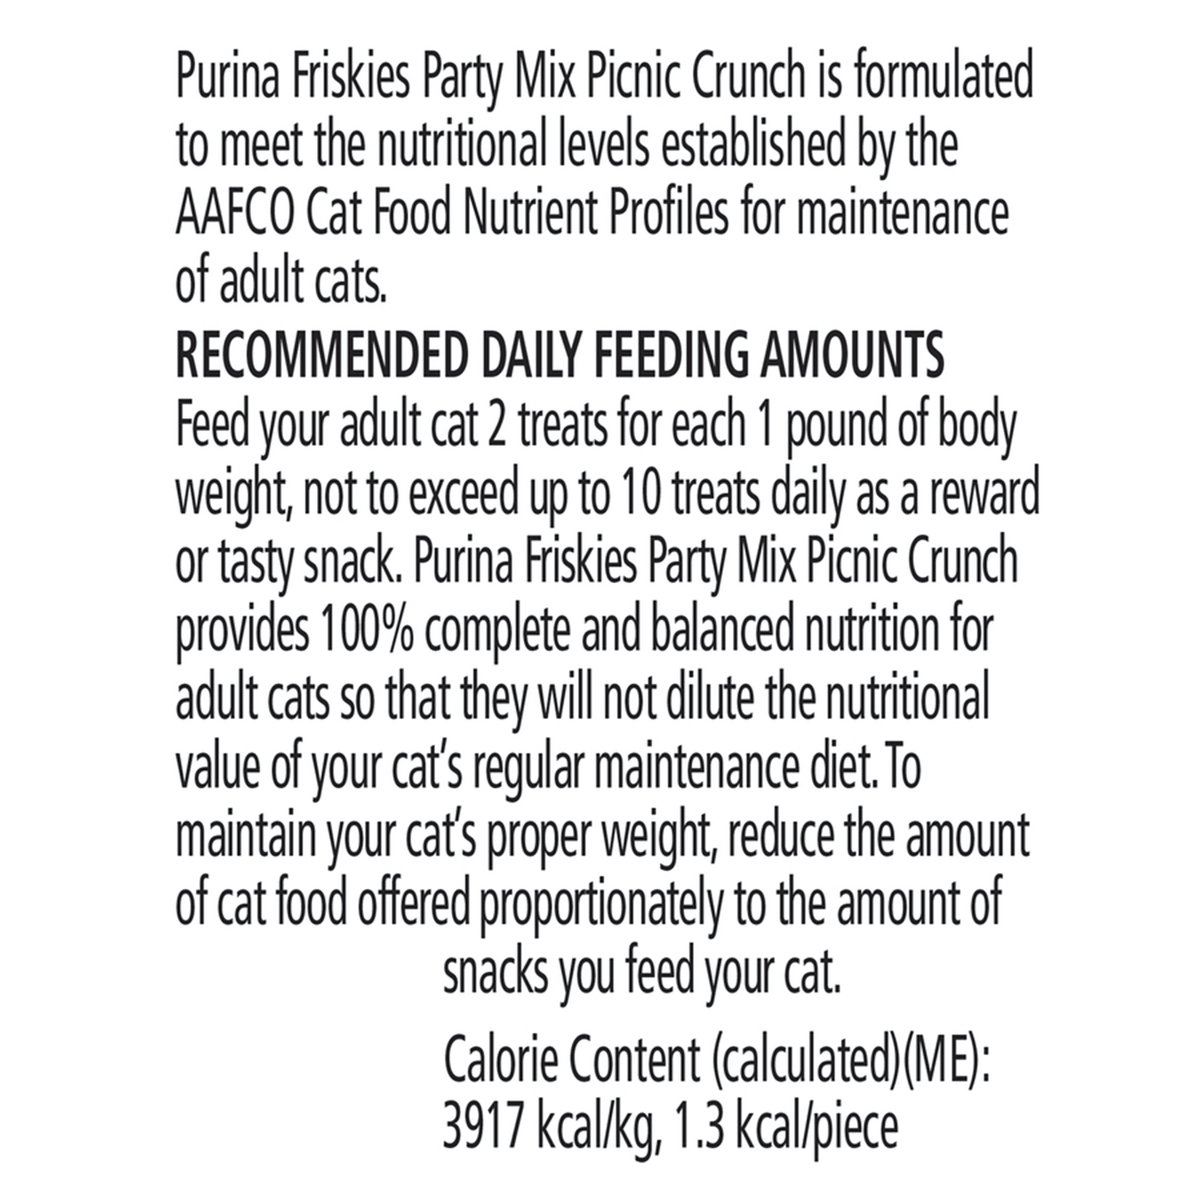 Purina Friskies Party Mix Cat Food Picnic 60 g